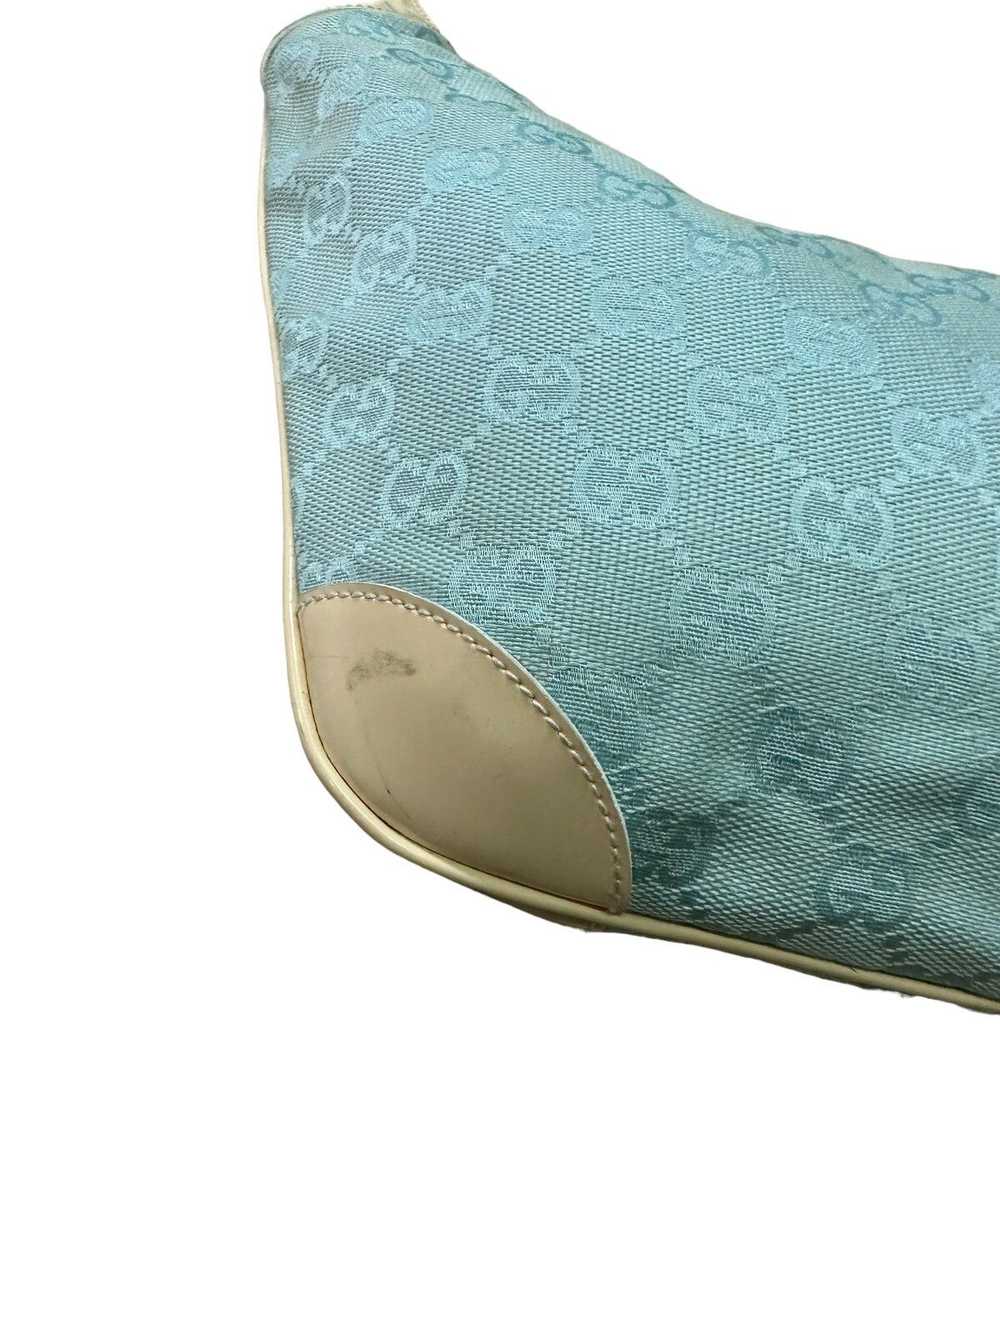 Gucci AUTHENTIC GUCCI MONOGRAM SOFT BLUE HOBO BAG - image 6